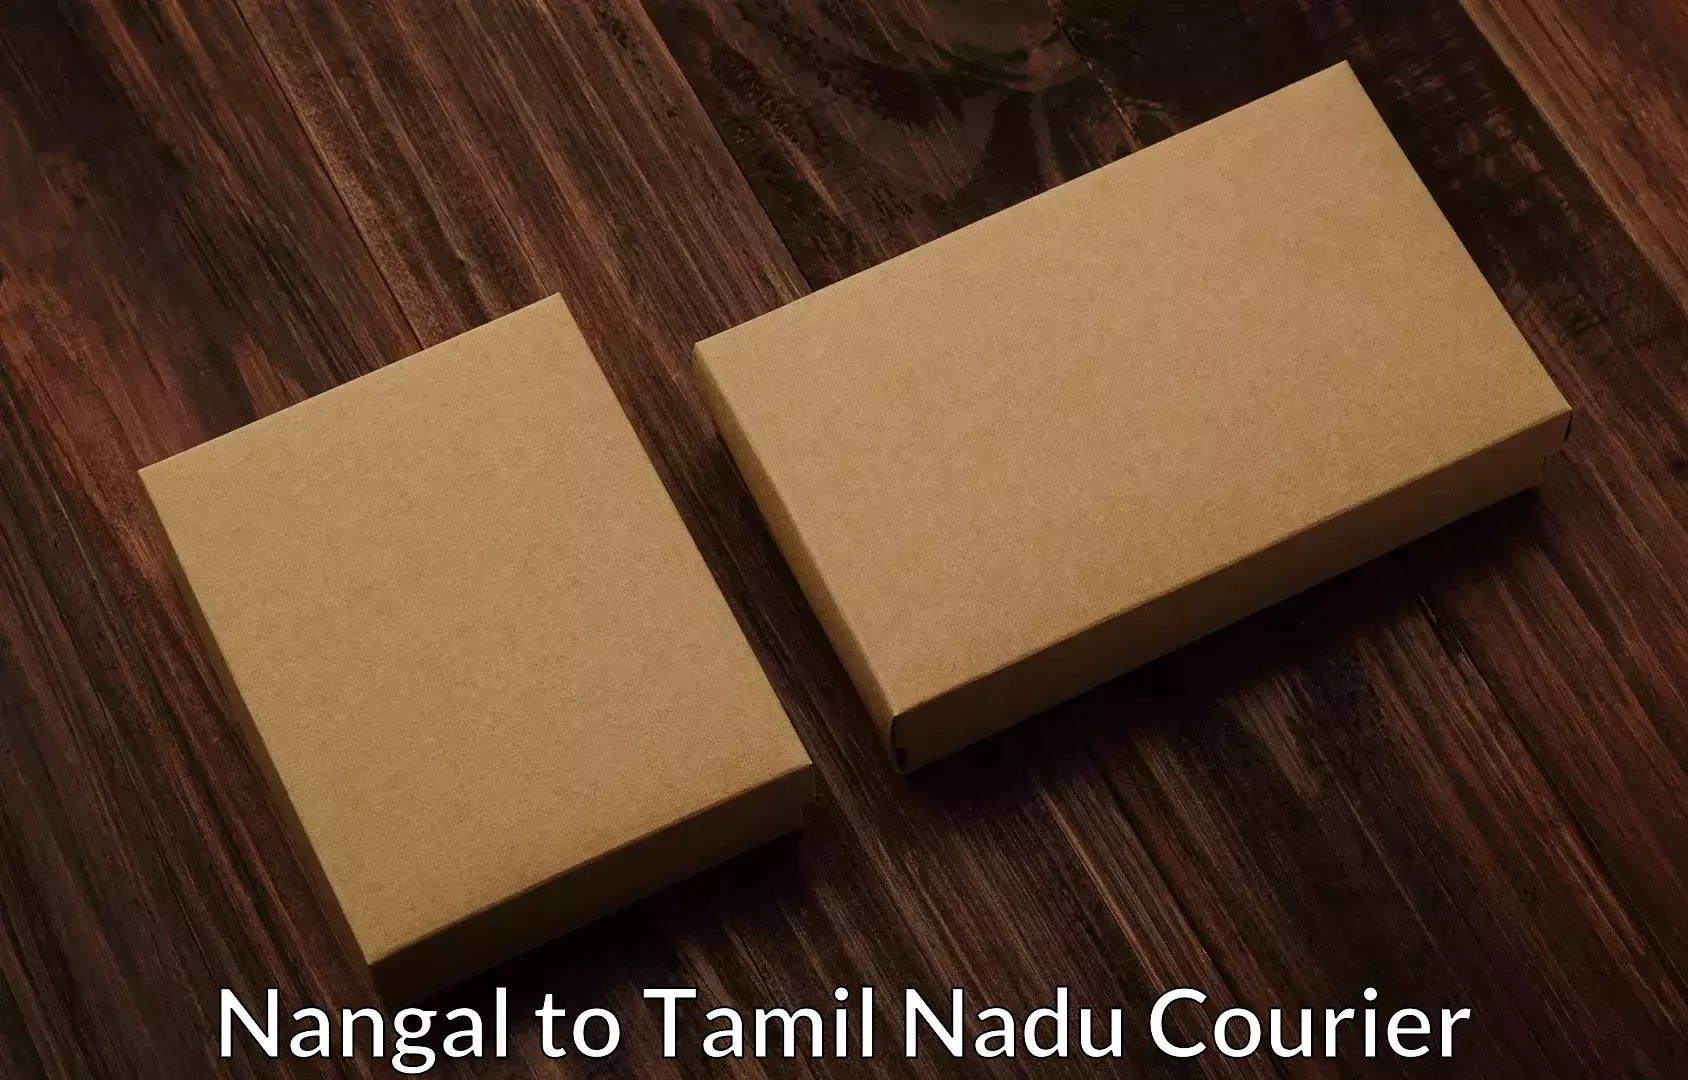 Quality moving company Nangal to Tamil Nadu